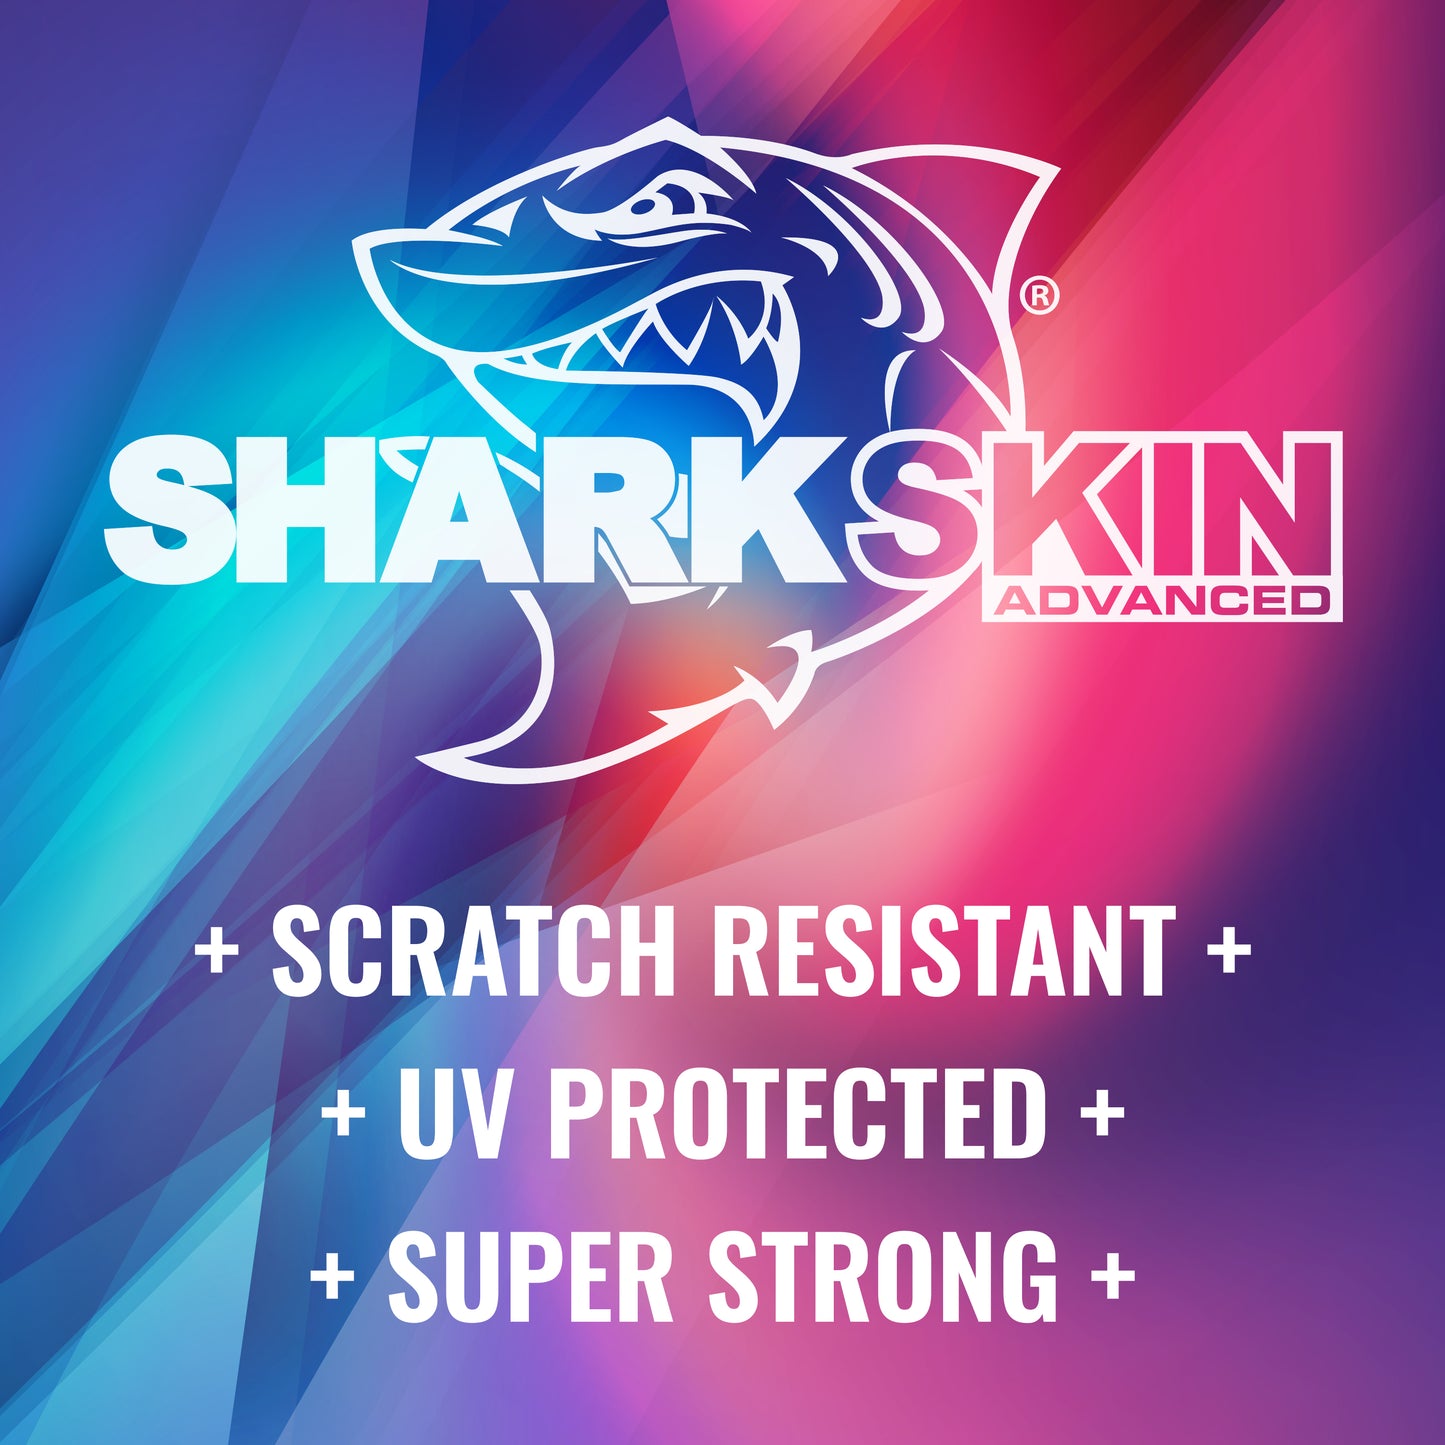 SharkSkin benefits. Scratch resistant, UV Protected, Super Strong. 